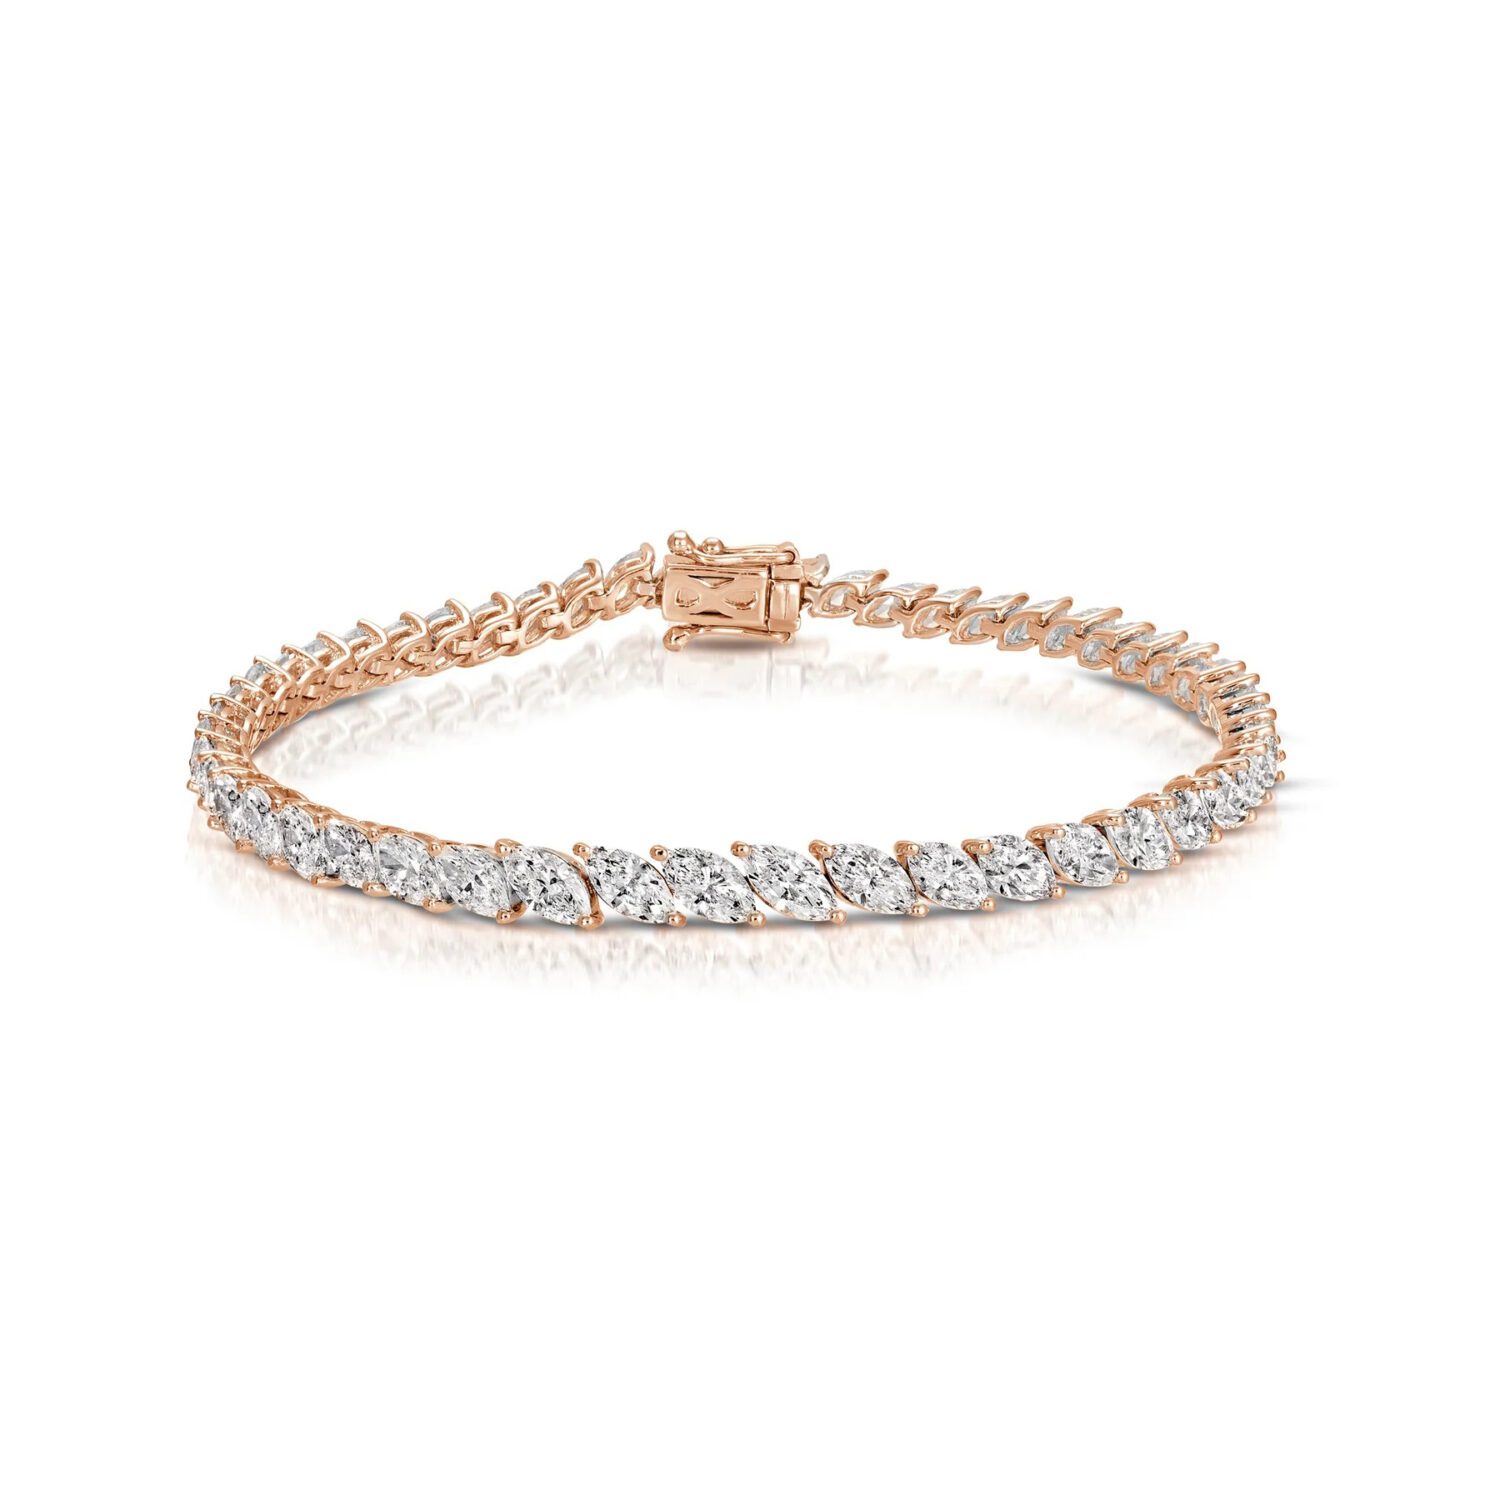 Lab grown diamonds in Cyprus - 8ct Marquis Cut Diamond Tennis Bracelet